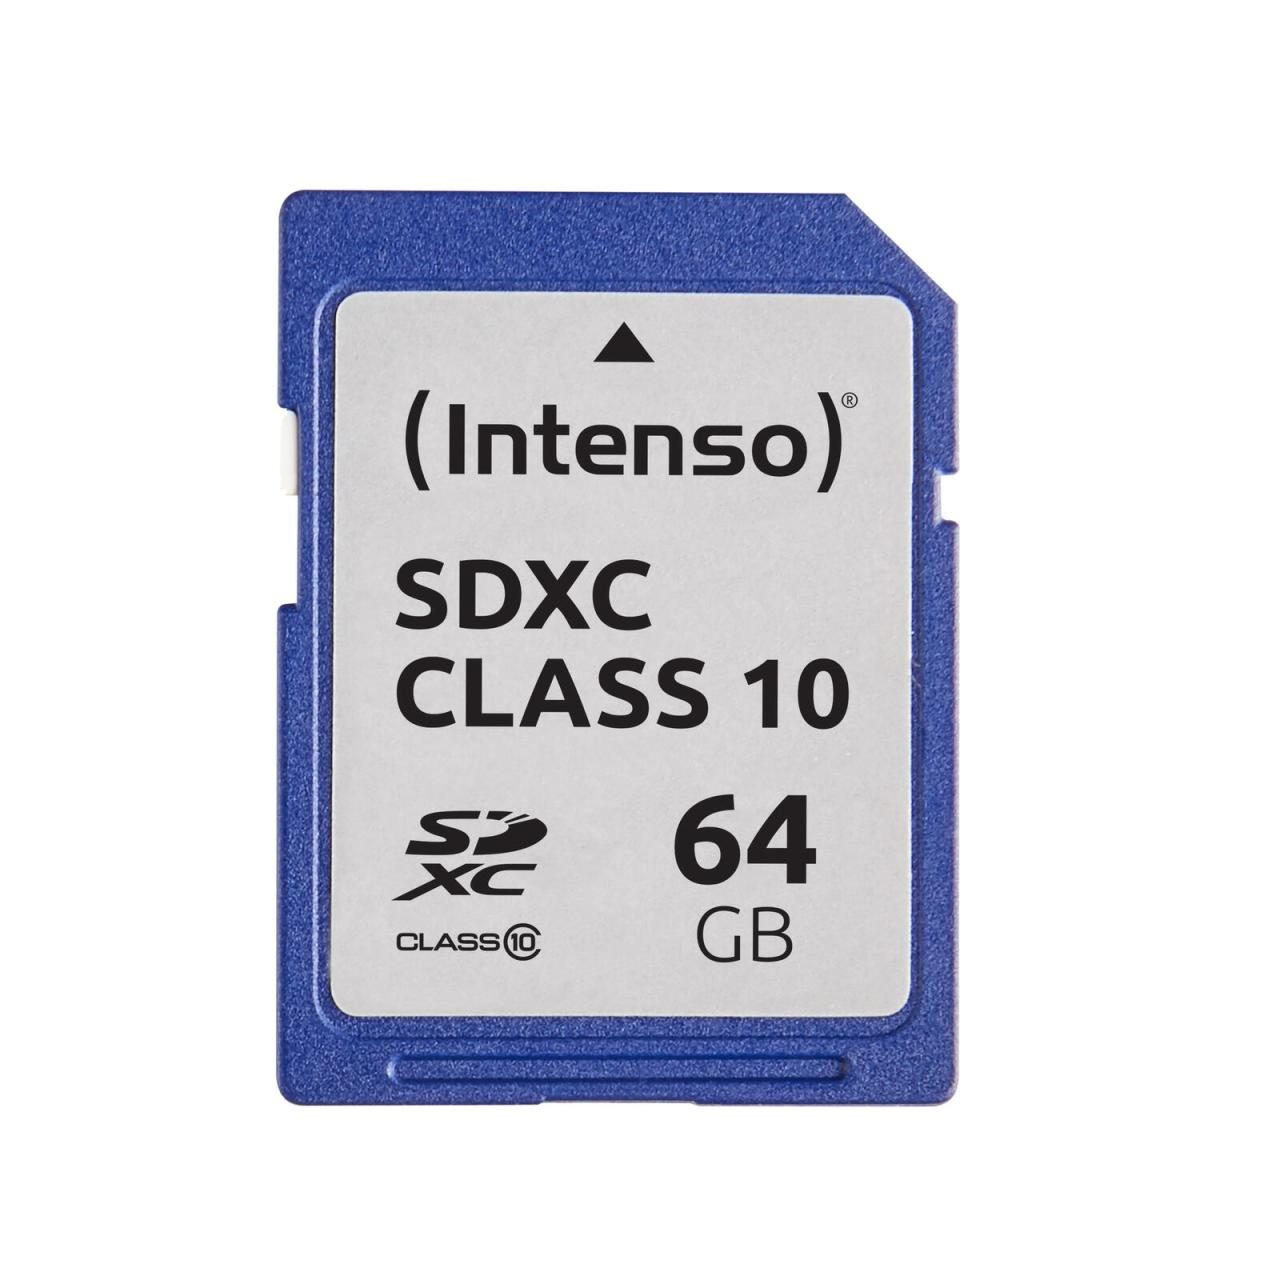 INTENSO Intenso SD-Speicherkarte GB, 64 SDXC Speicherkarte, 64 MB/s GB, Class - 10 20